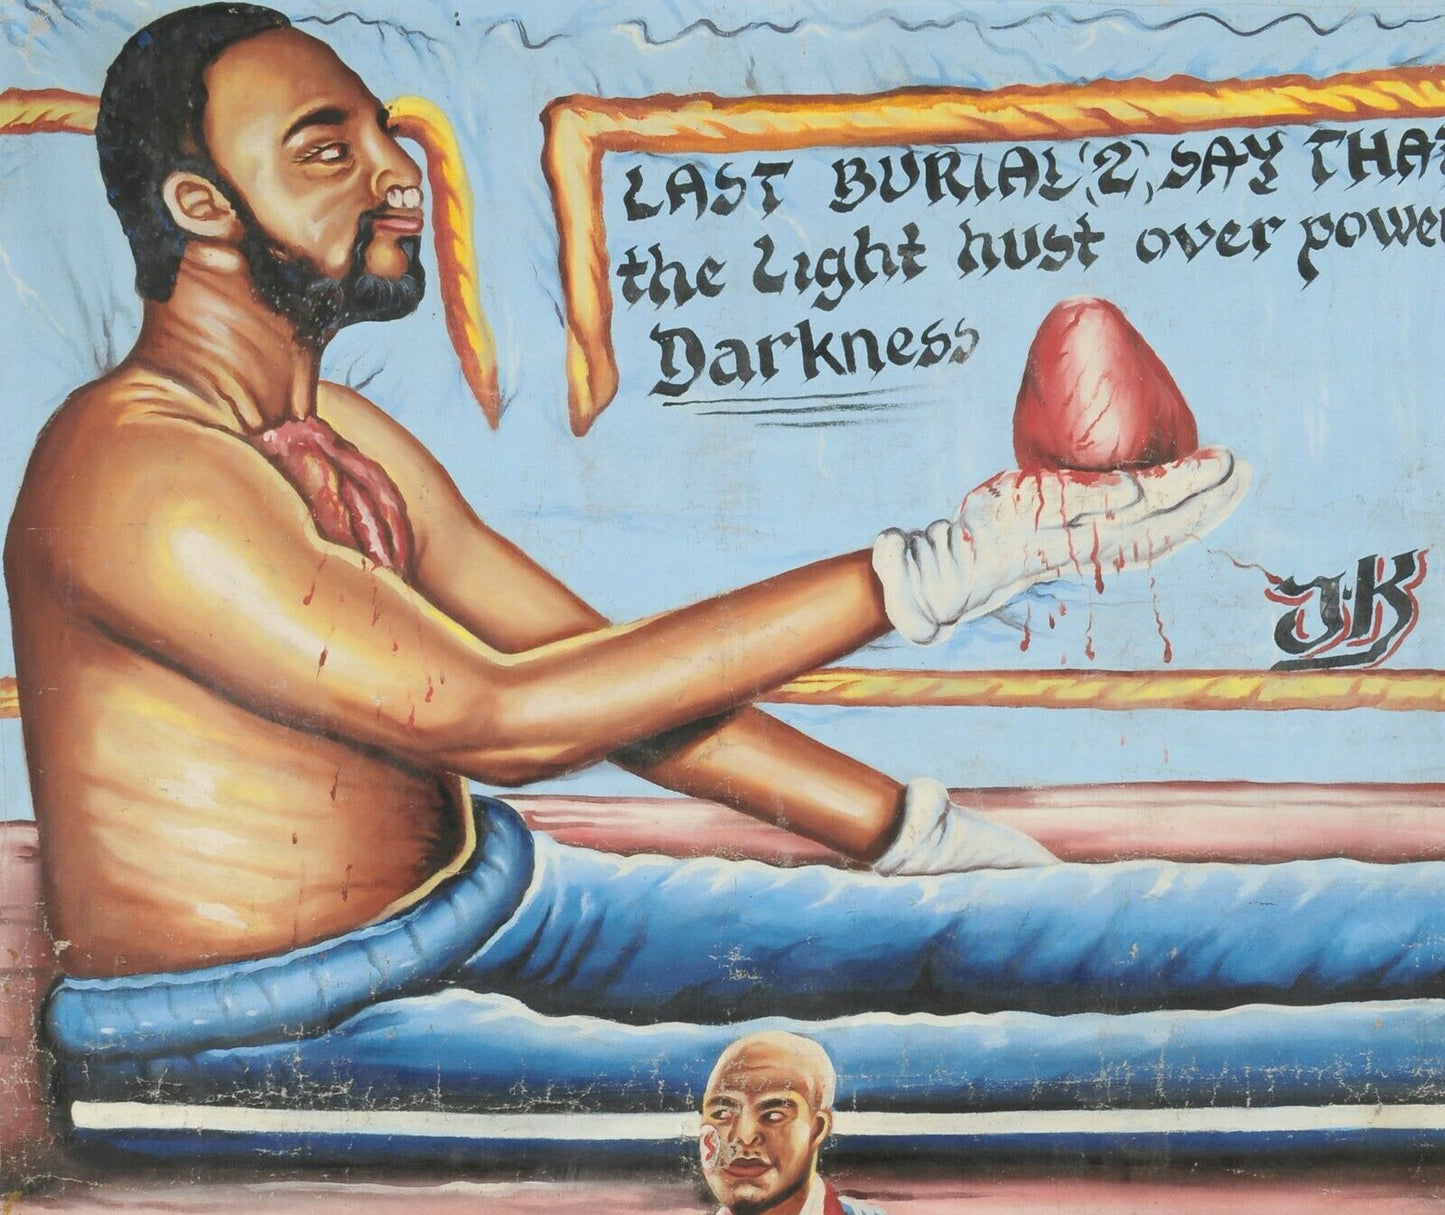 Cinema Movie Ghana poster African hand painted canvas Last Burial 2 - Tribalgh